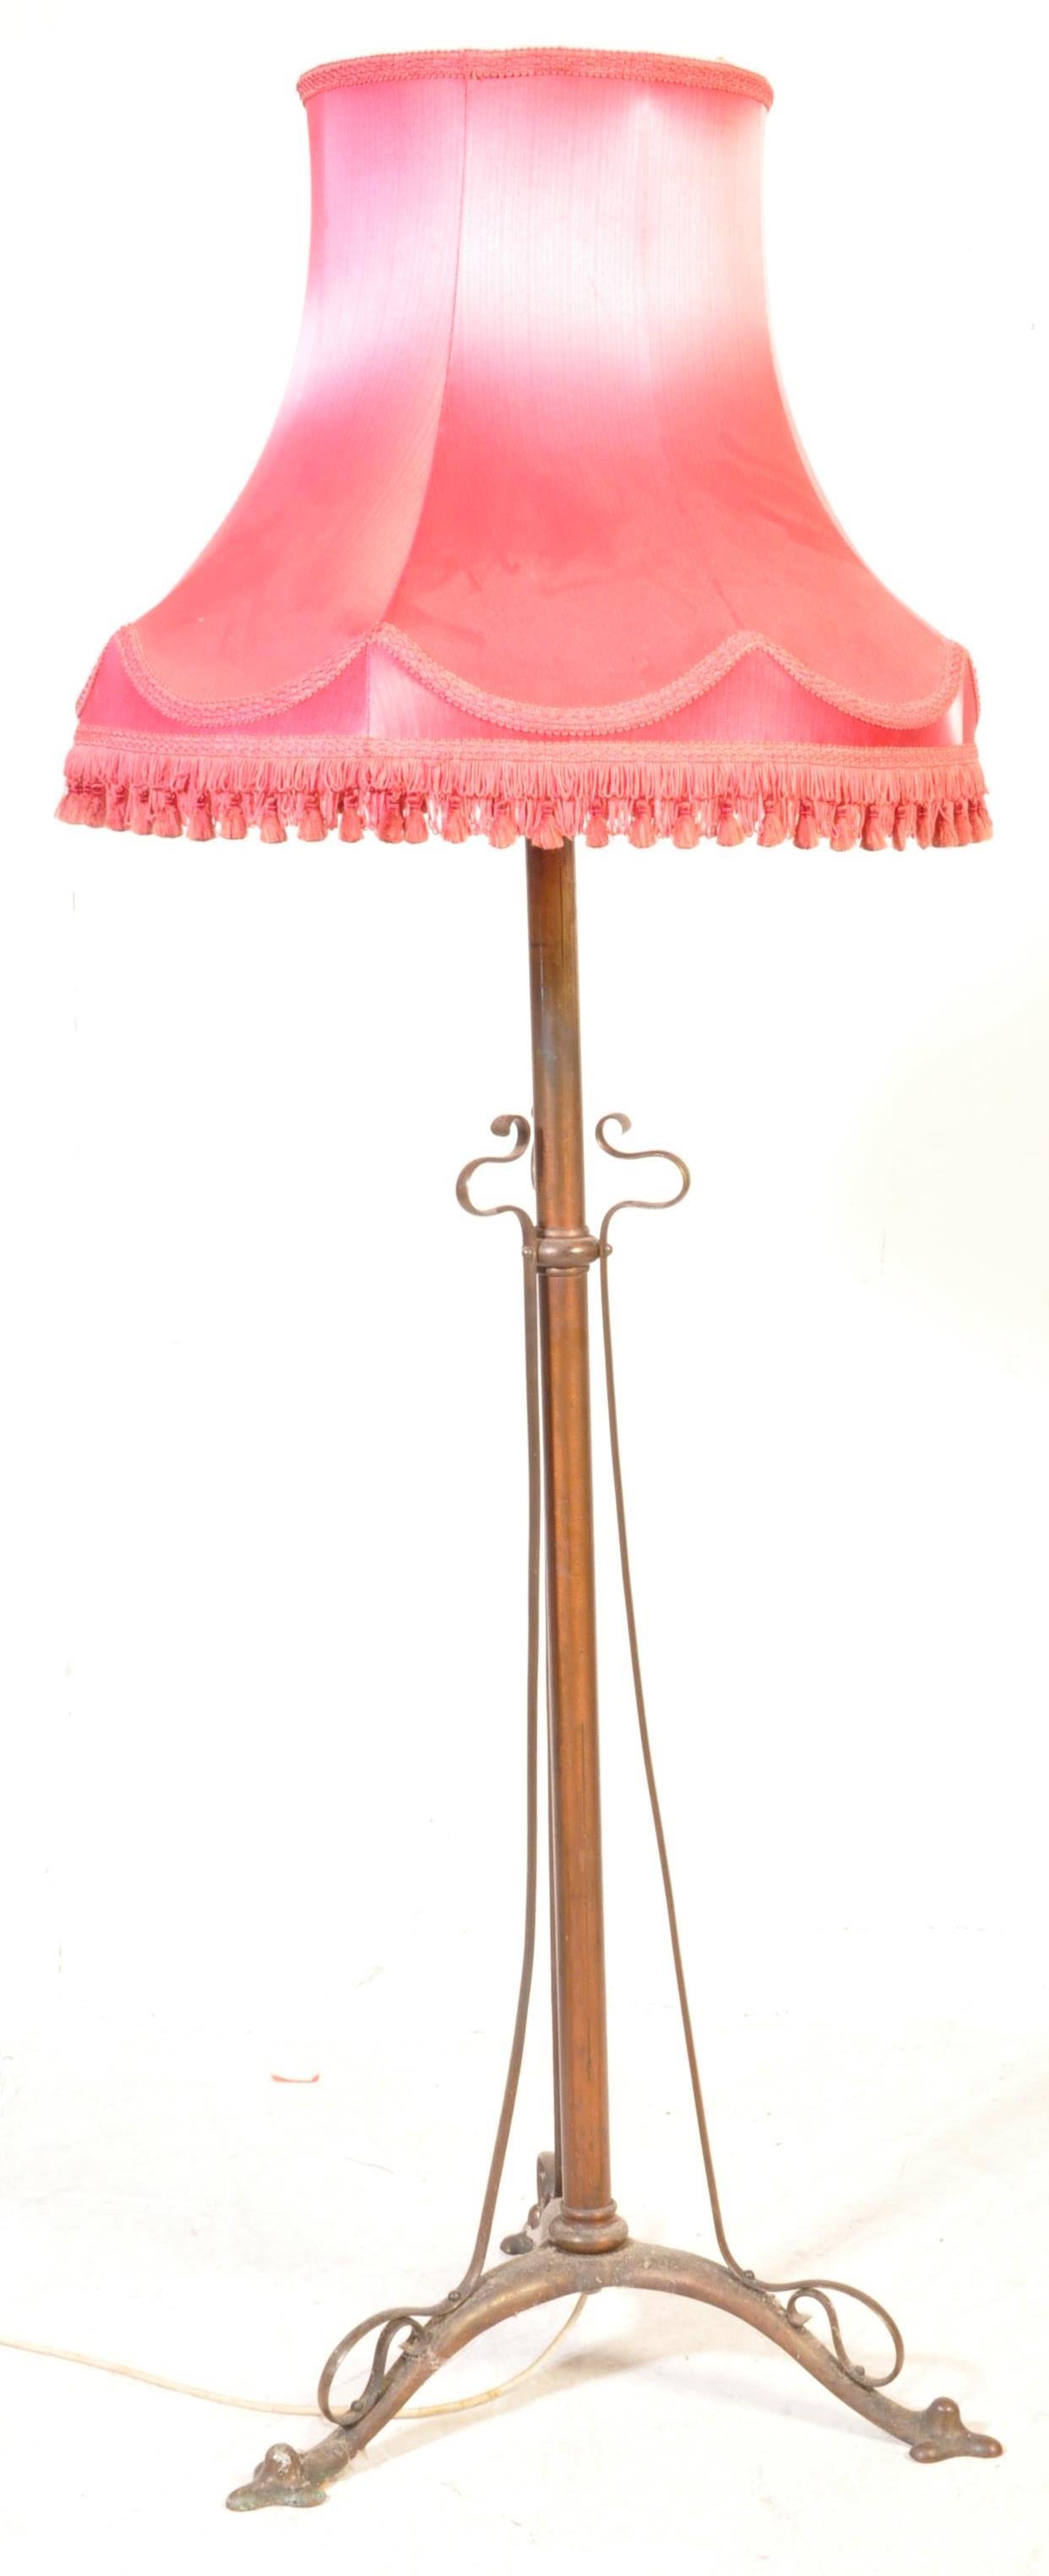 19TH CENTURY BRASS ARTS & CRAFTS STANDARD FLOOR LAMP